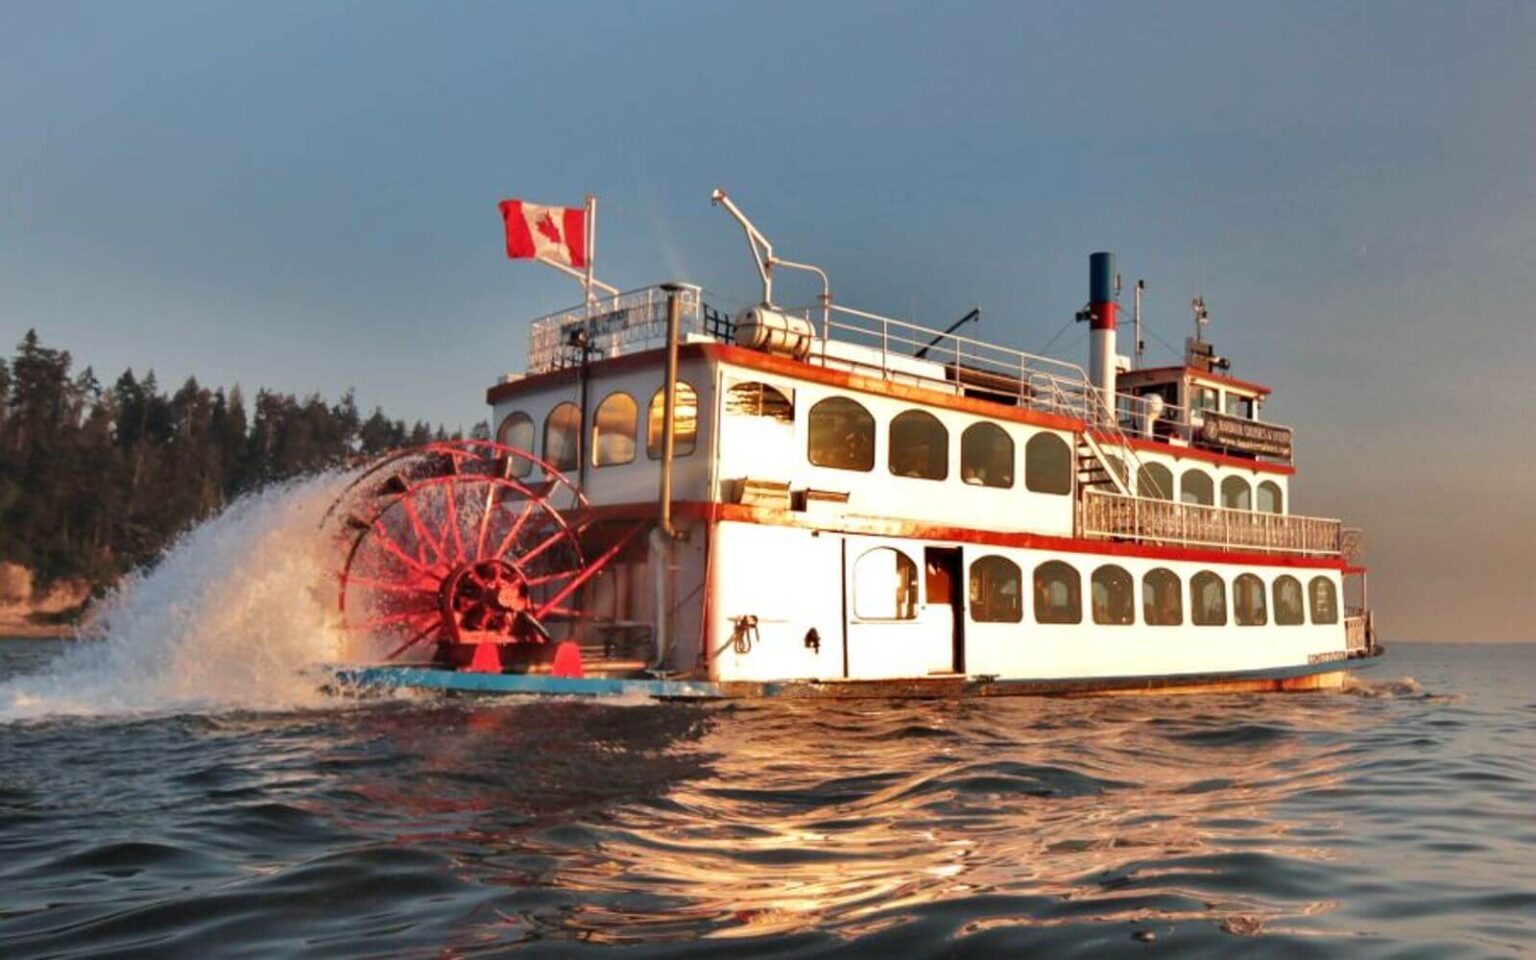 vancouver boat tours photos